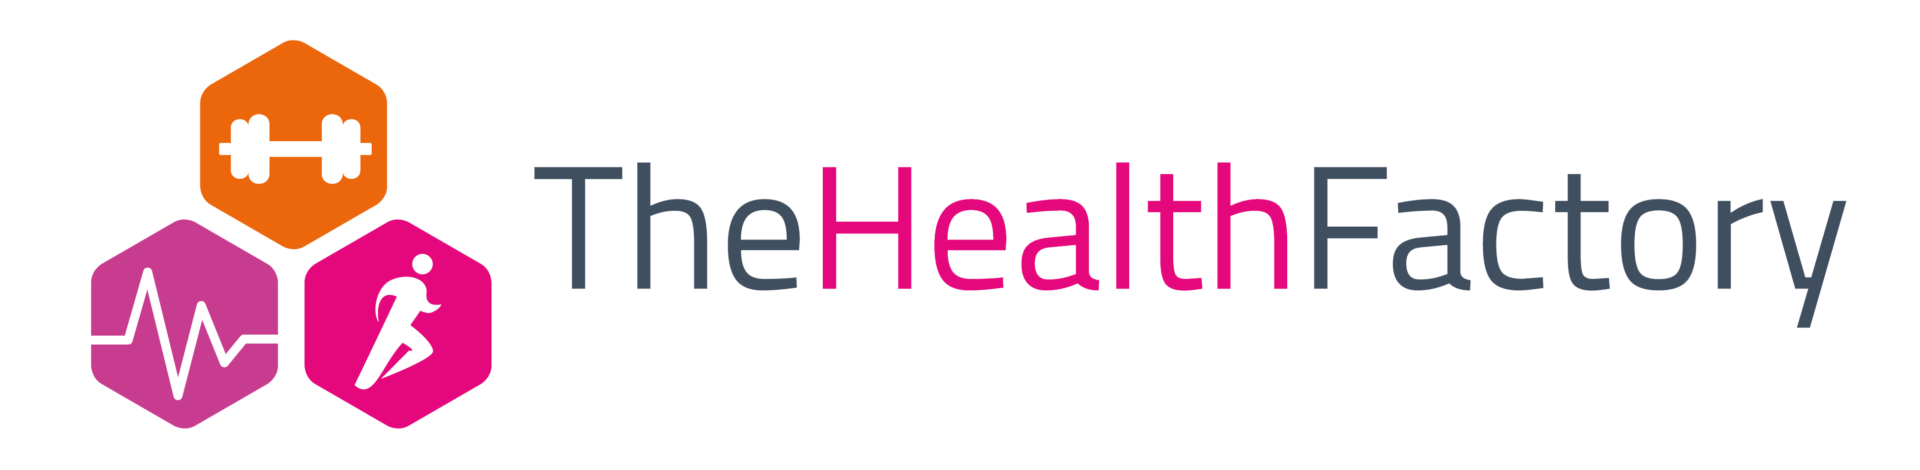 The Health Factory logo